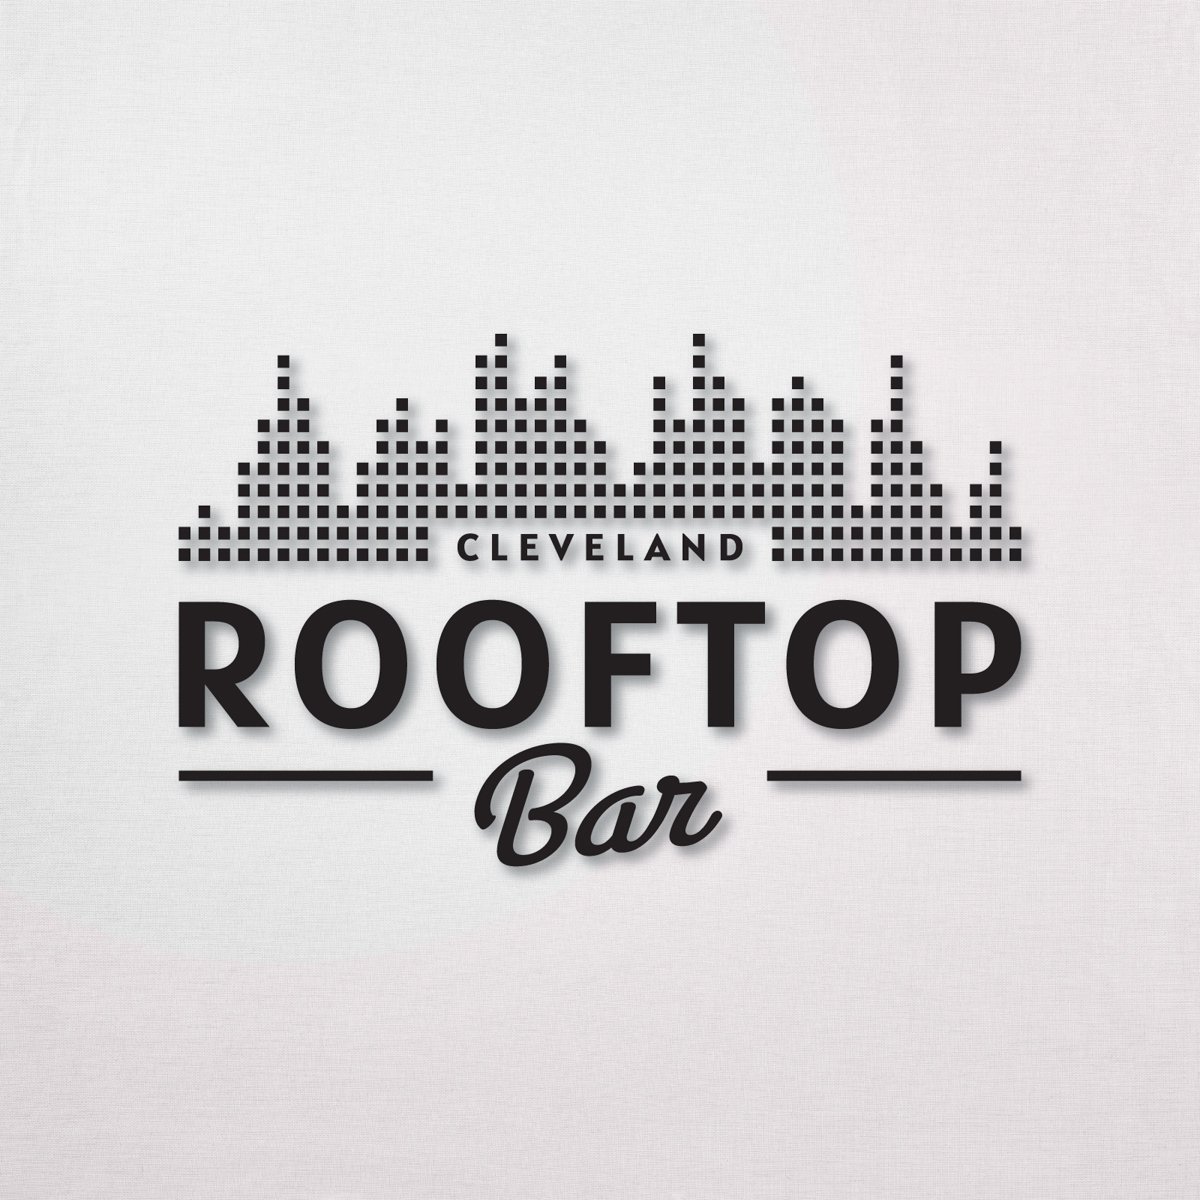 Rooftop Bar at Indie logo.